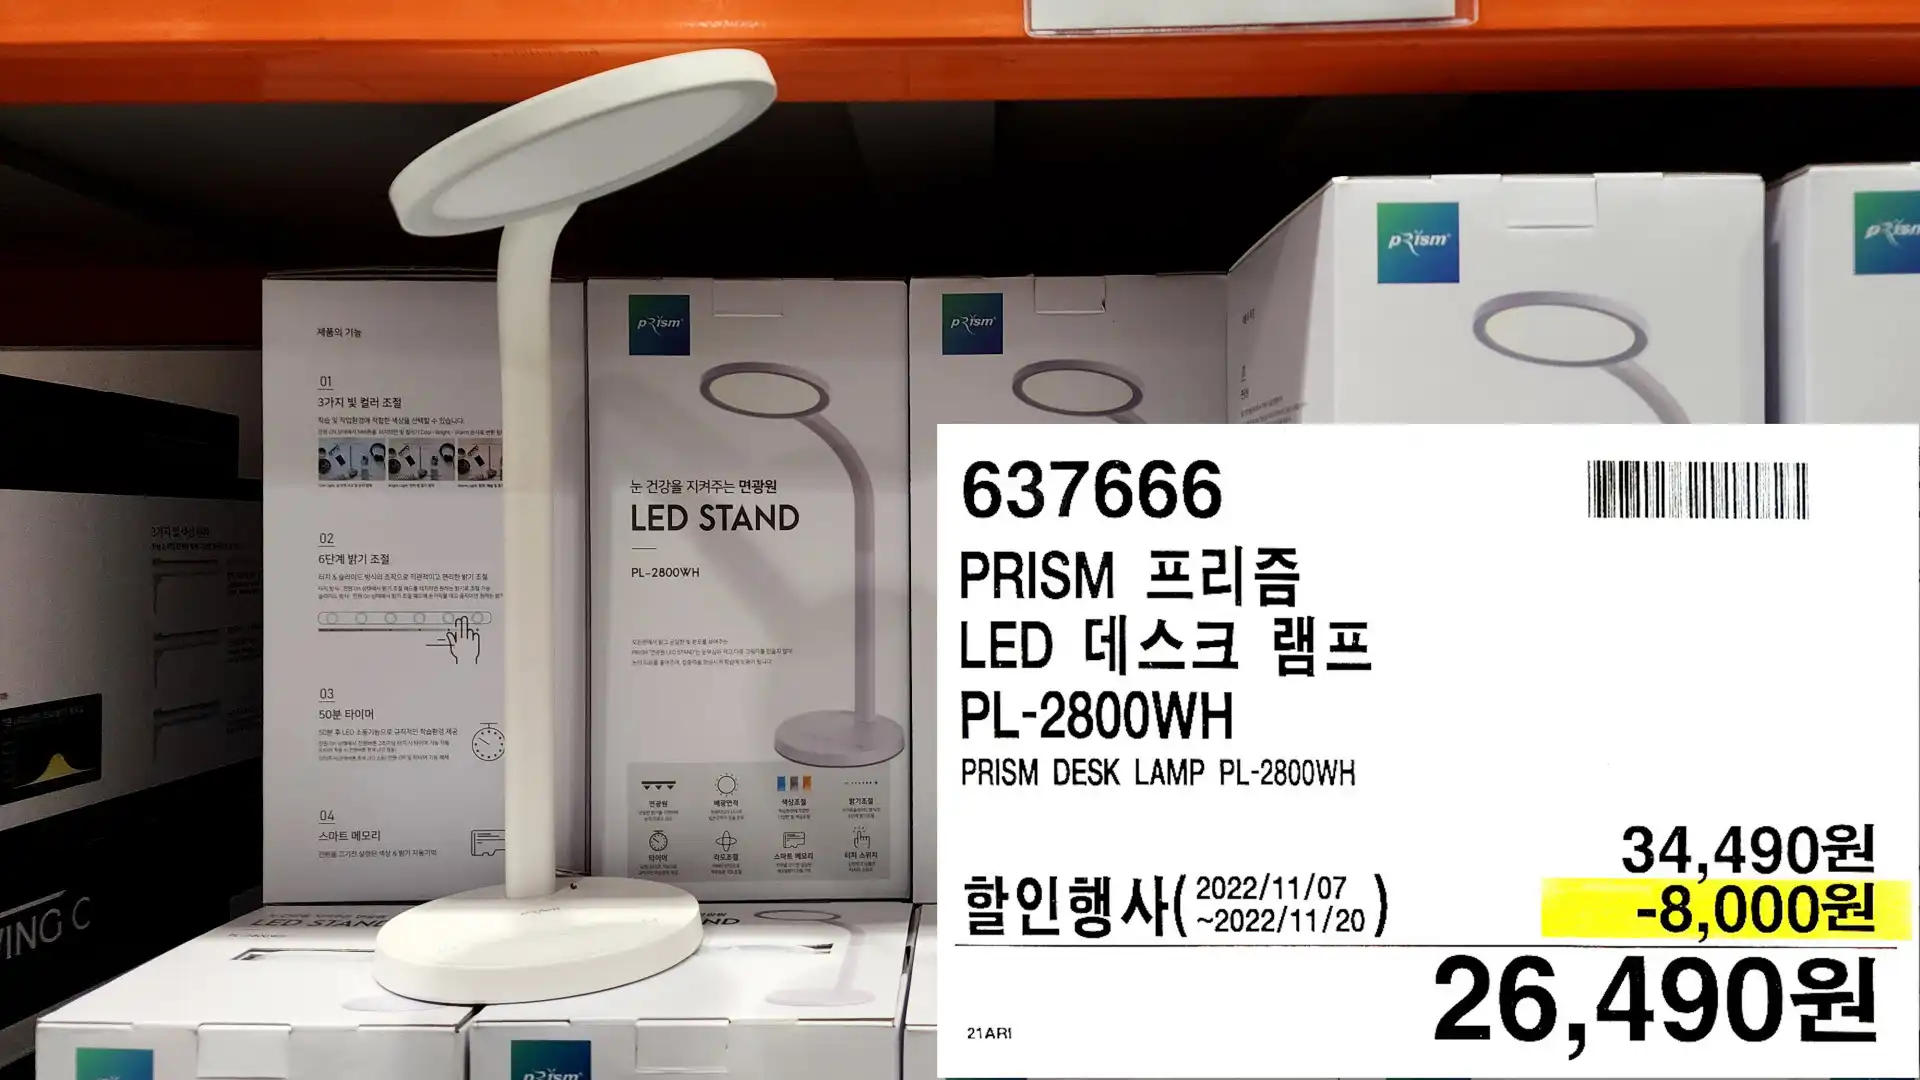 PRISM 프리즘
LED 데스크 램프
PL-2800WH
PRISM DESK LAMP PL-2800WH
26&#44;490원